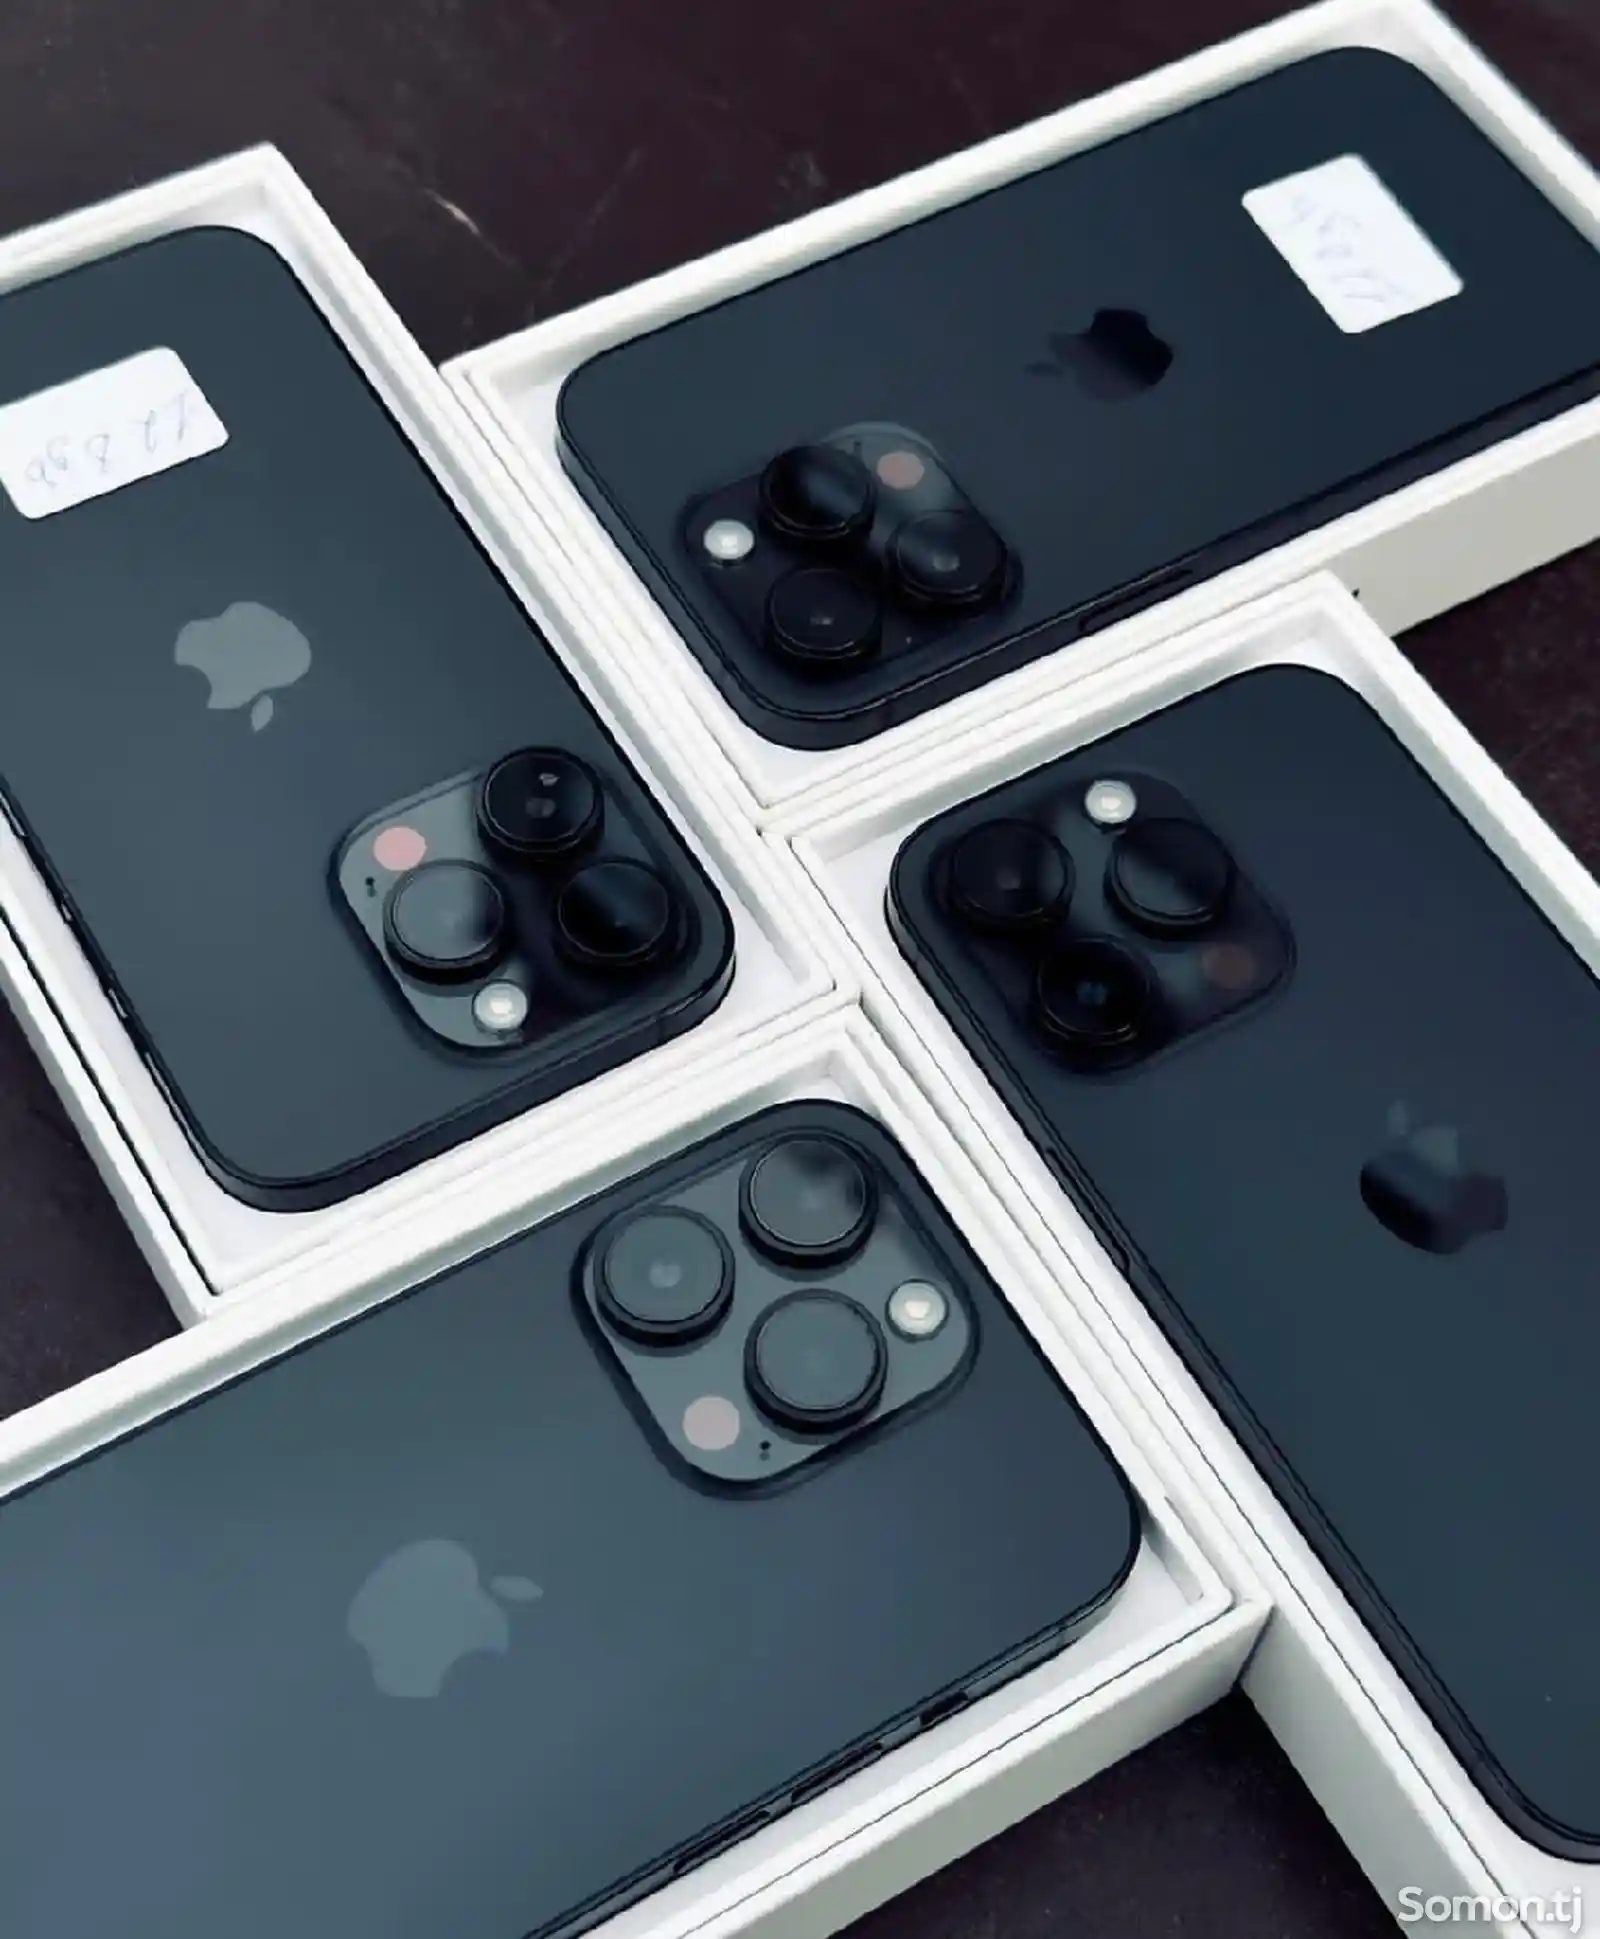 Apple iPhone Xr, 128 gb, Black-3